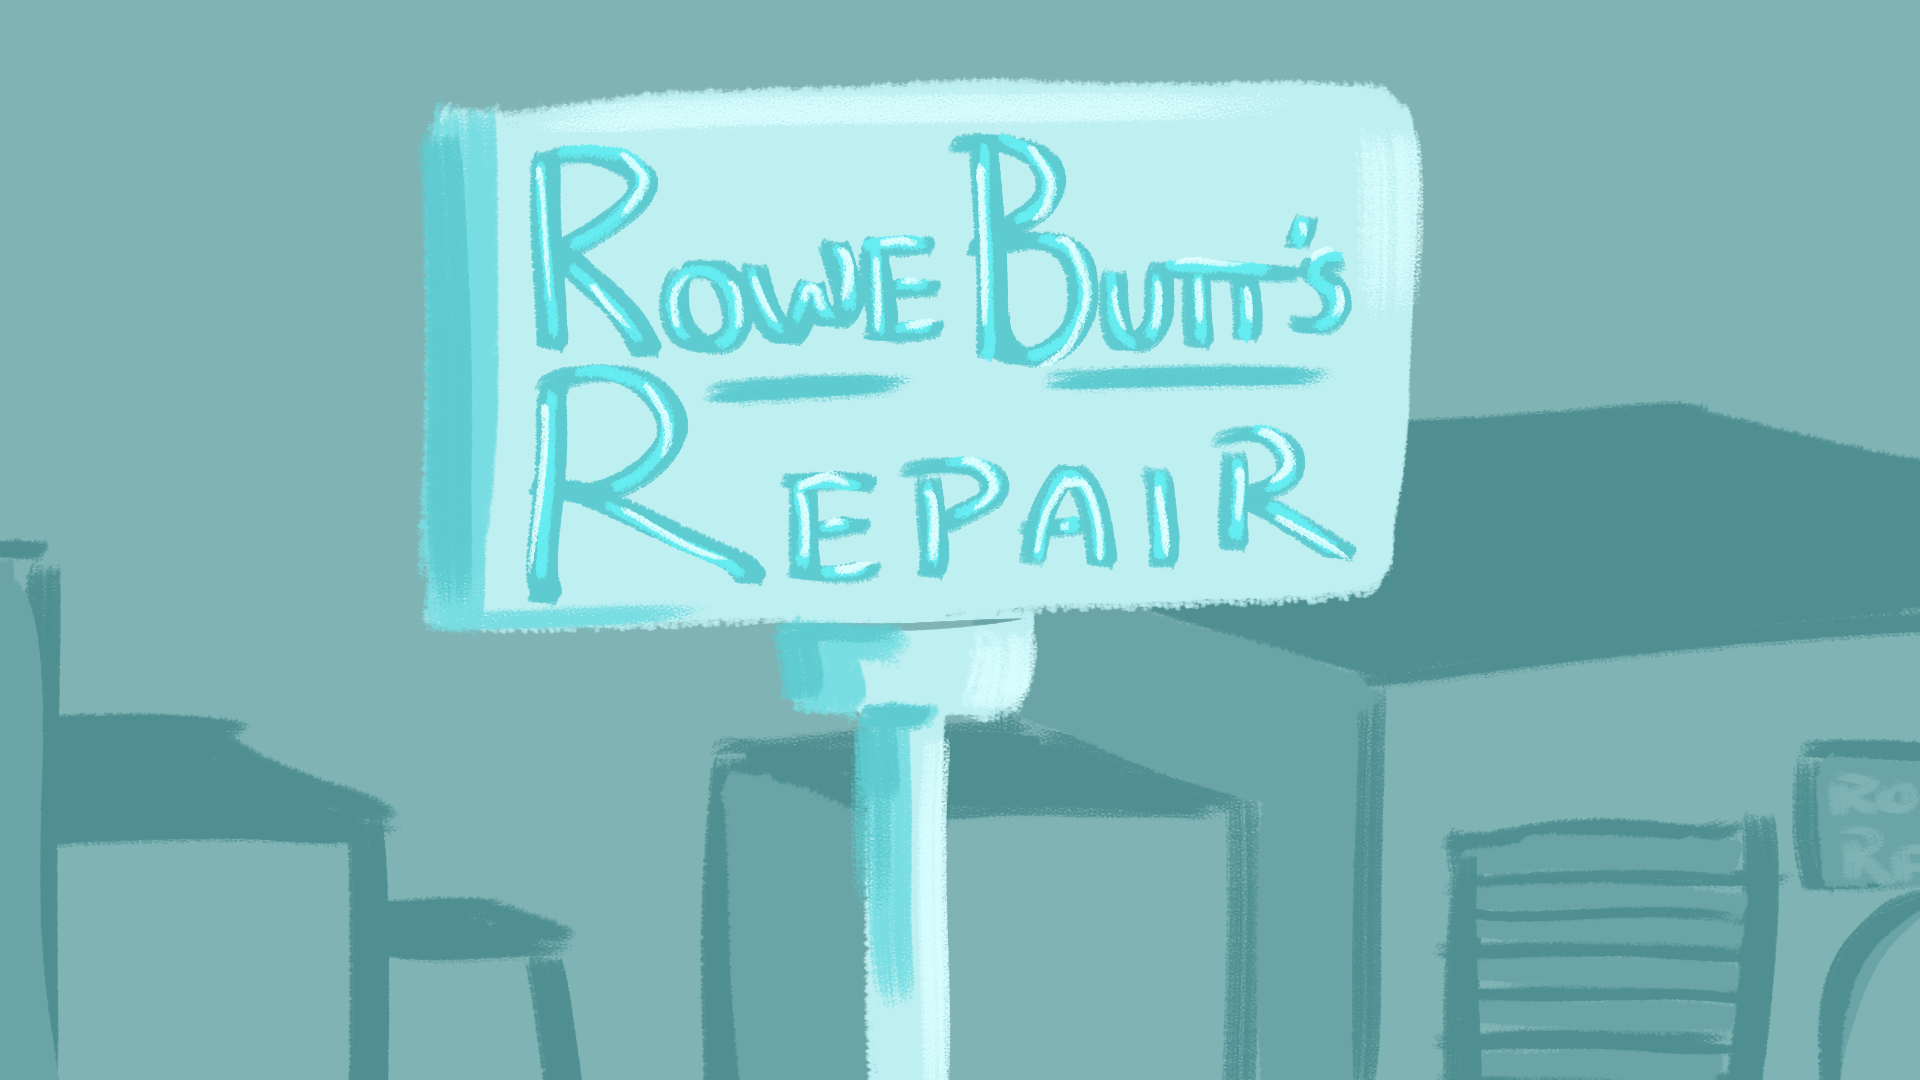 Rowe Butt's Repair